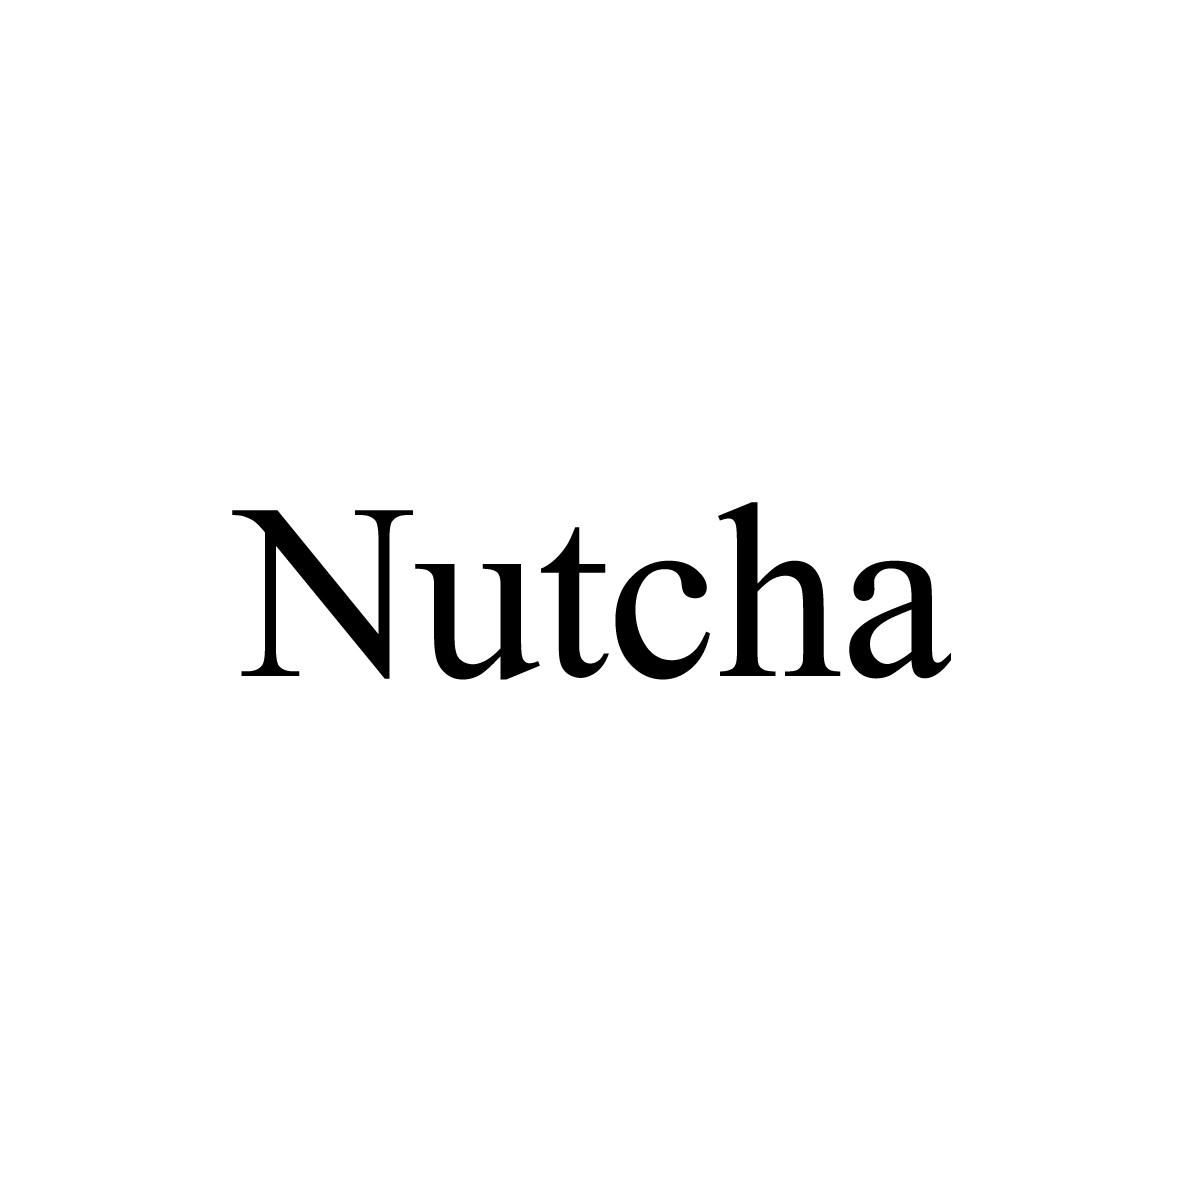 30类-面点饮品NUTCHA商标转让